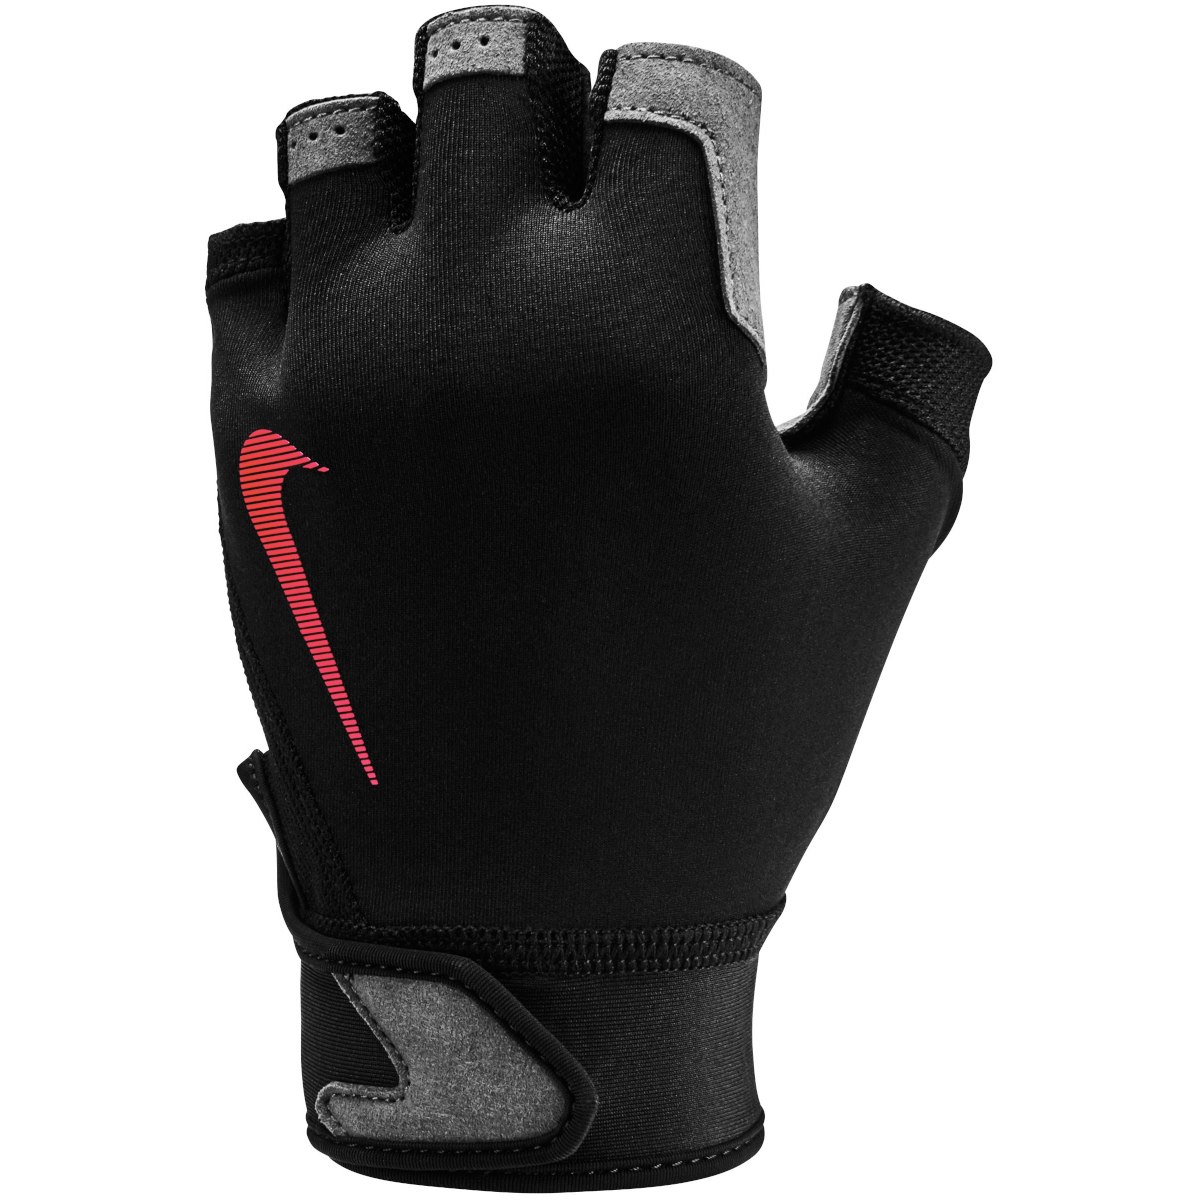 Bild von Nike Ultimate Fitness Gloves Handschuhe für Herren - black/light crimson/light crimson 074